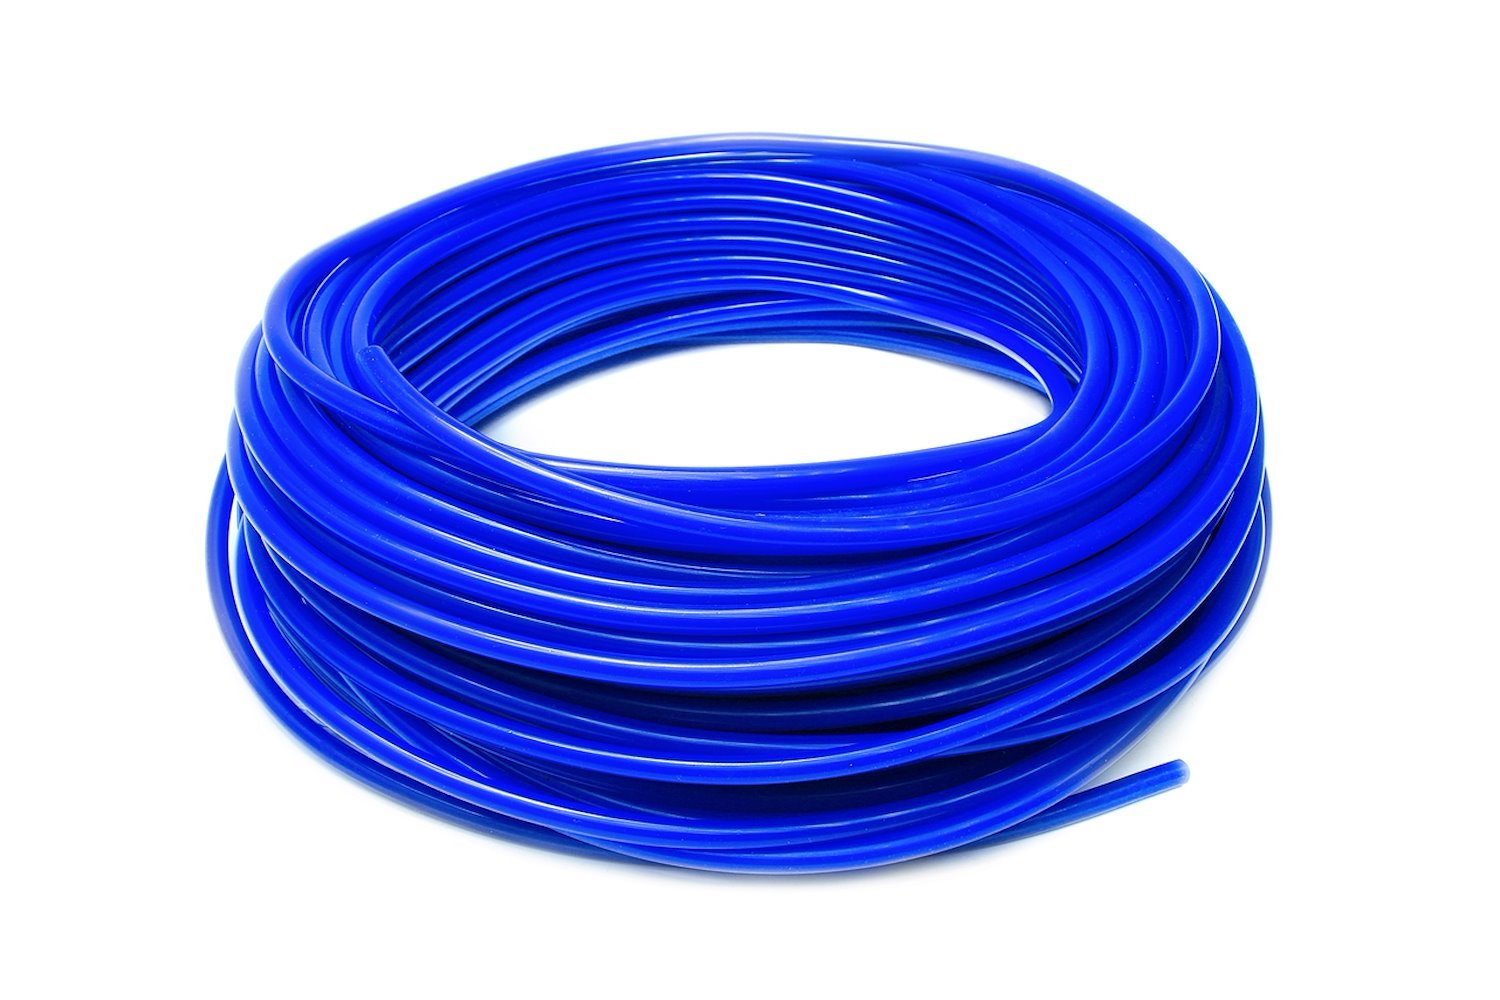 HTSVH7-BLUEx100 High-Temperature Silicone Vacuum Hose Tubing, 9/32 in. ID, 100 ft. Roll, Blue